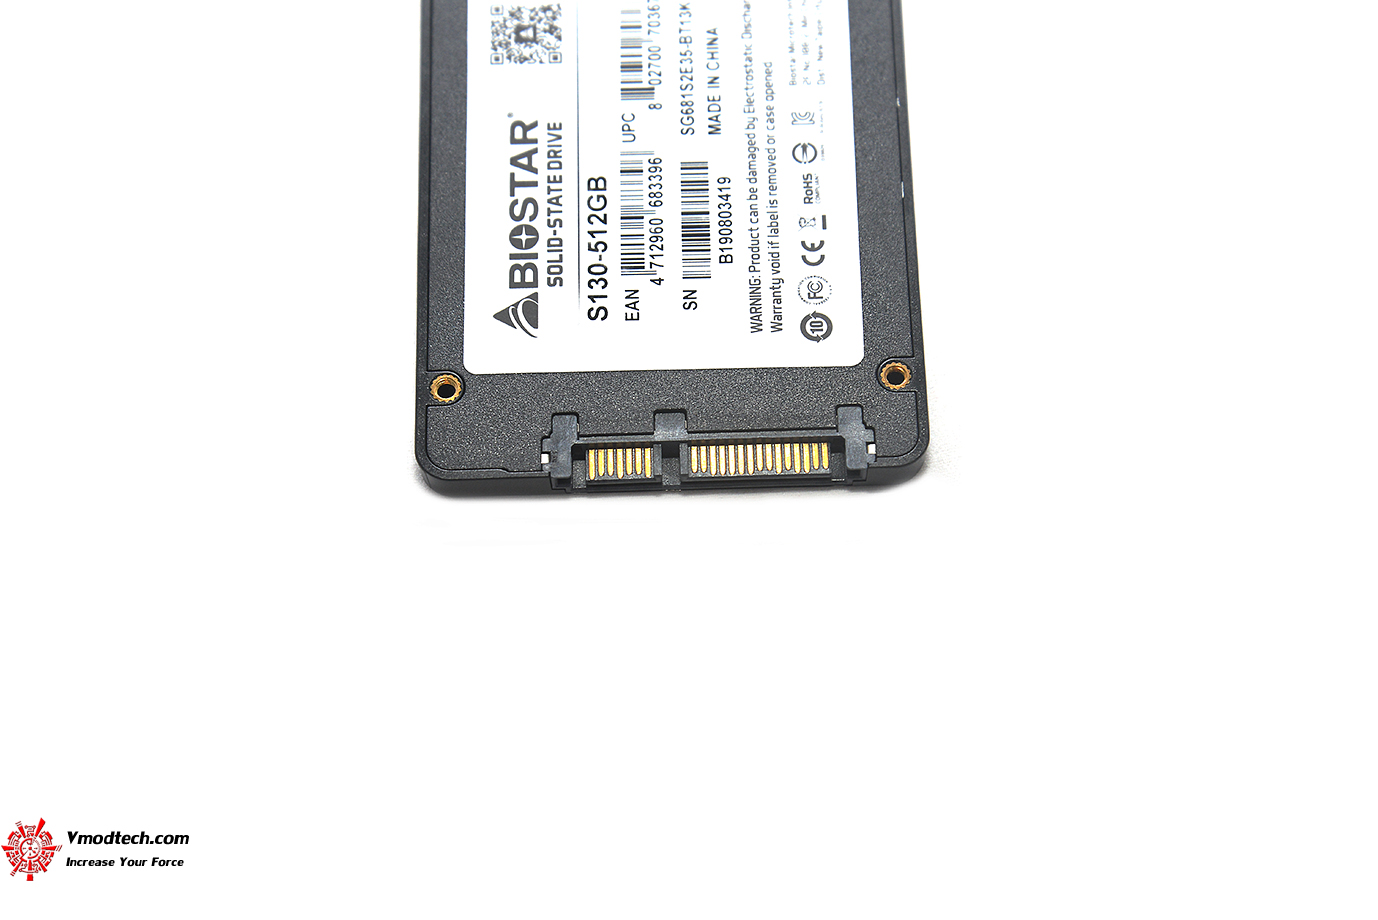 dsc 9938 Biostar SSD S130 512GB Review